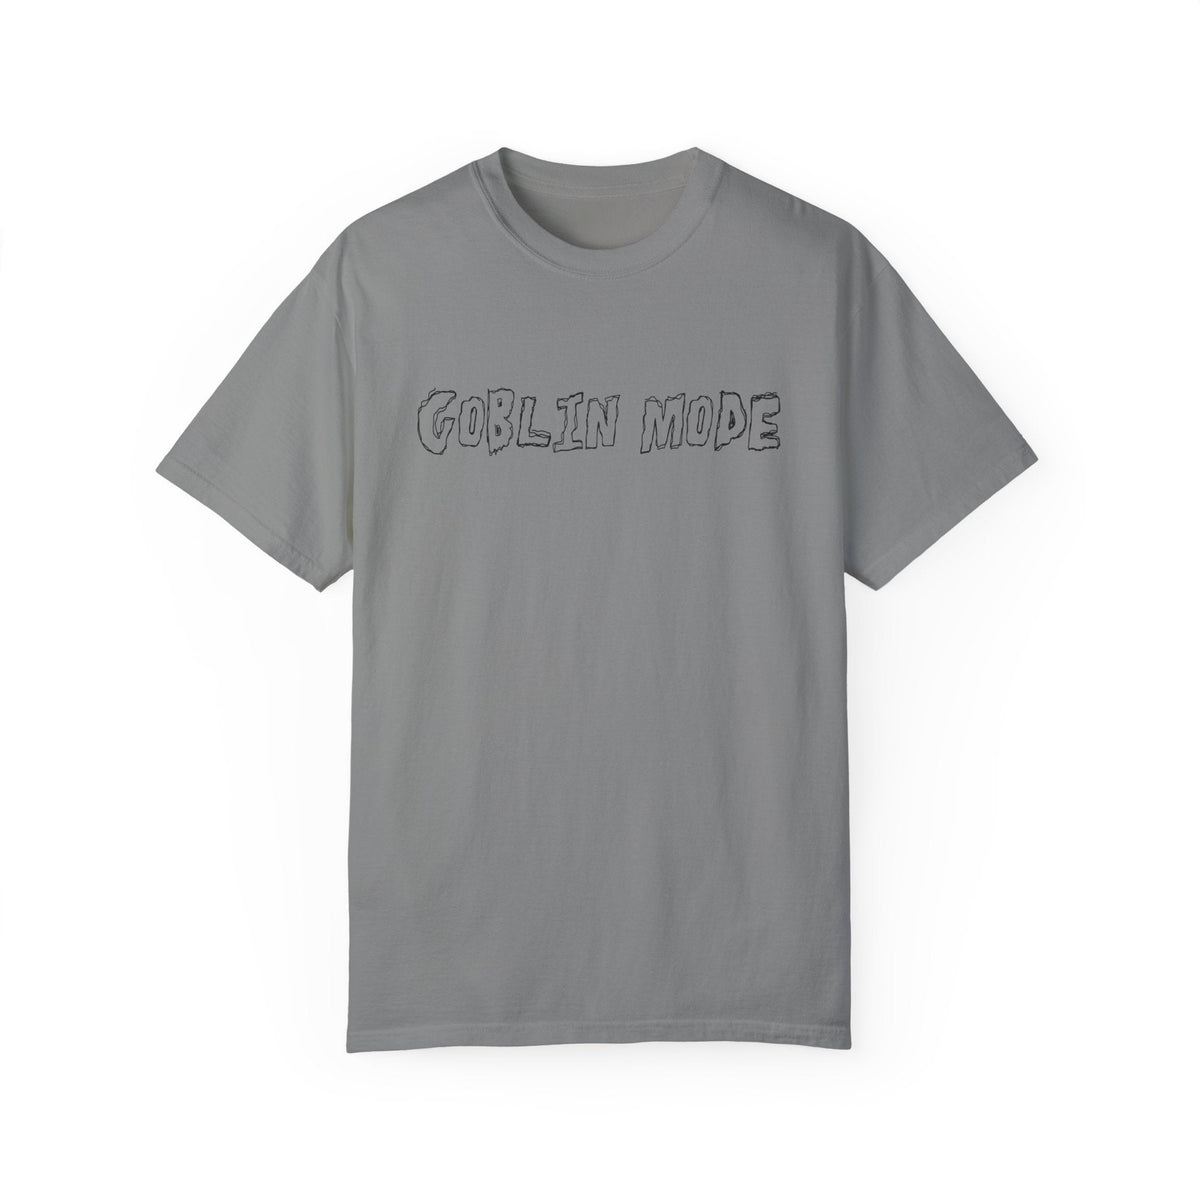 Goblin Mode Comfy Tee - Goth Cloth Co.T - Shirt80307681225203728452